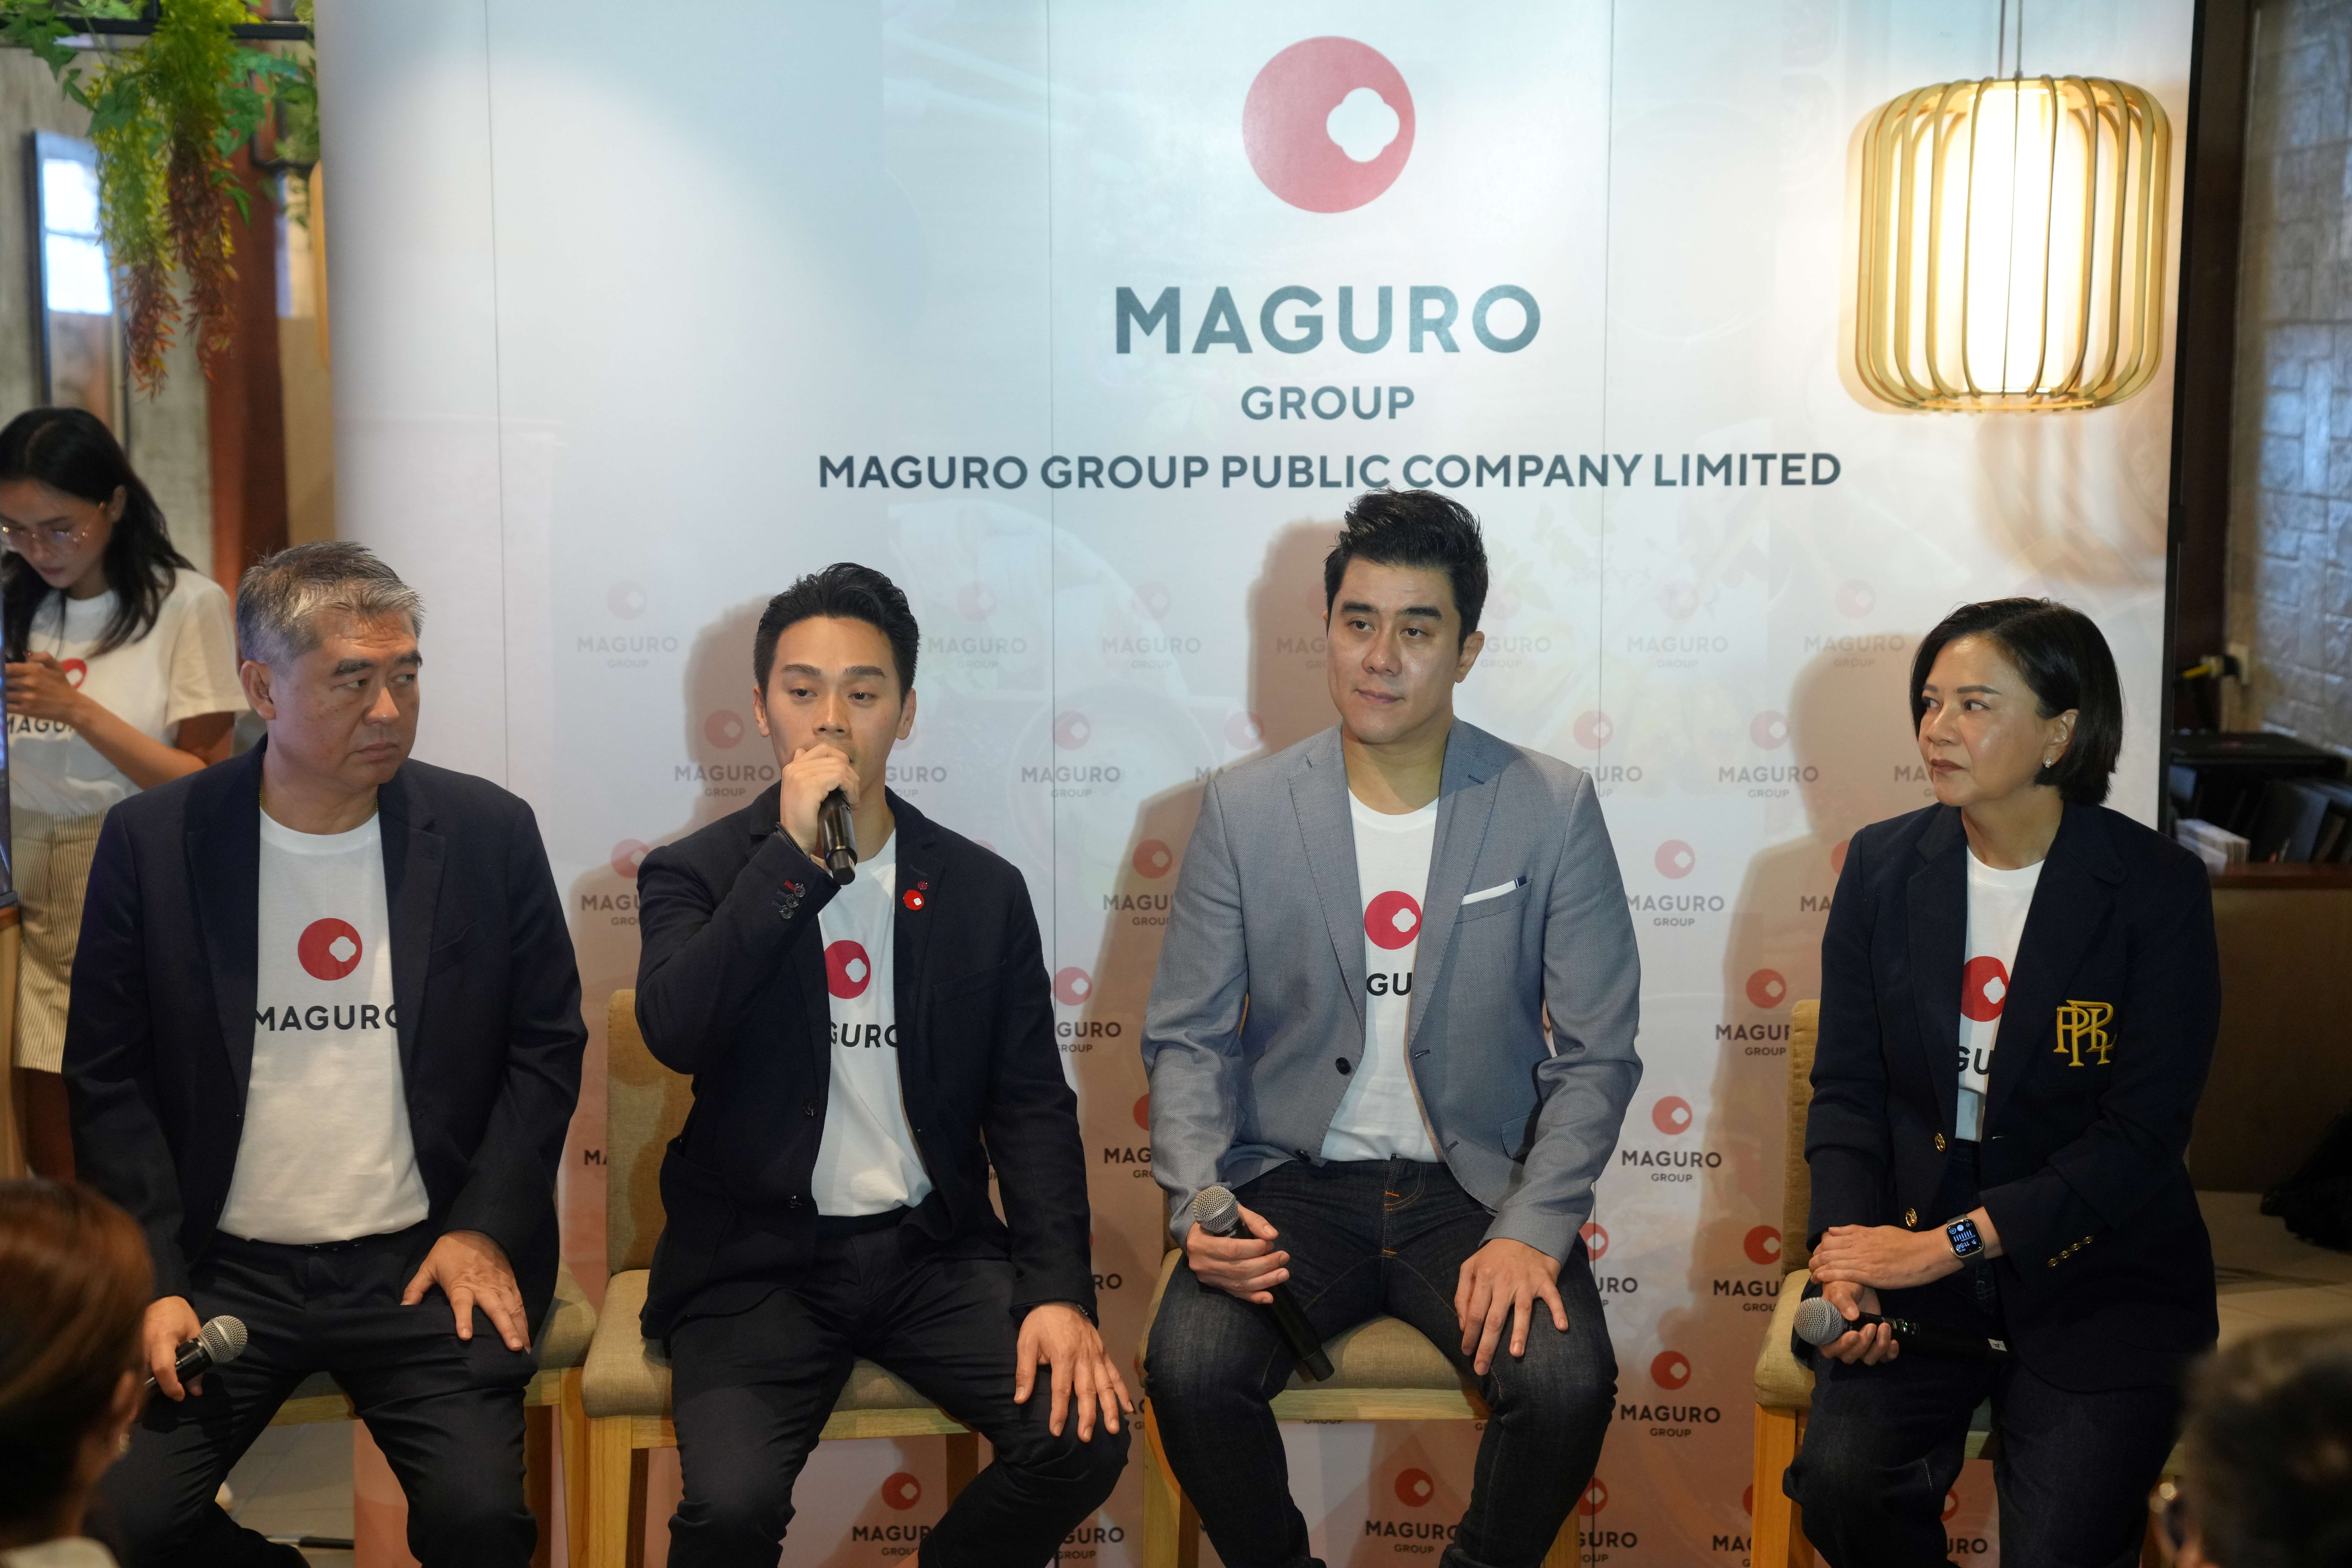 “MAGURO” ผู้นำธุรกิจร้านอาหารญี่ปุ่นและเกาหลีระดับ Premium-Mass เตรียม IPO โชว์รายได้ทะลุ 1,000 ล้านบาท เติบโต 57.06% พร้อมรุกเพิ่มสาขา ดันโตต่อเนื่อง